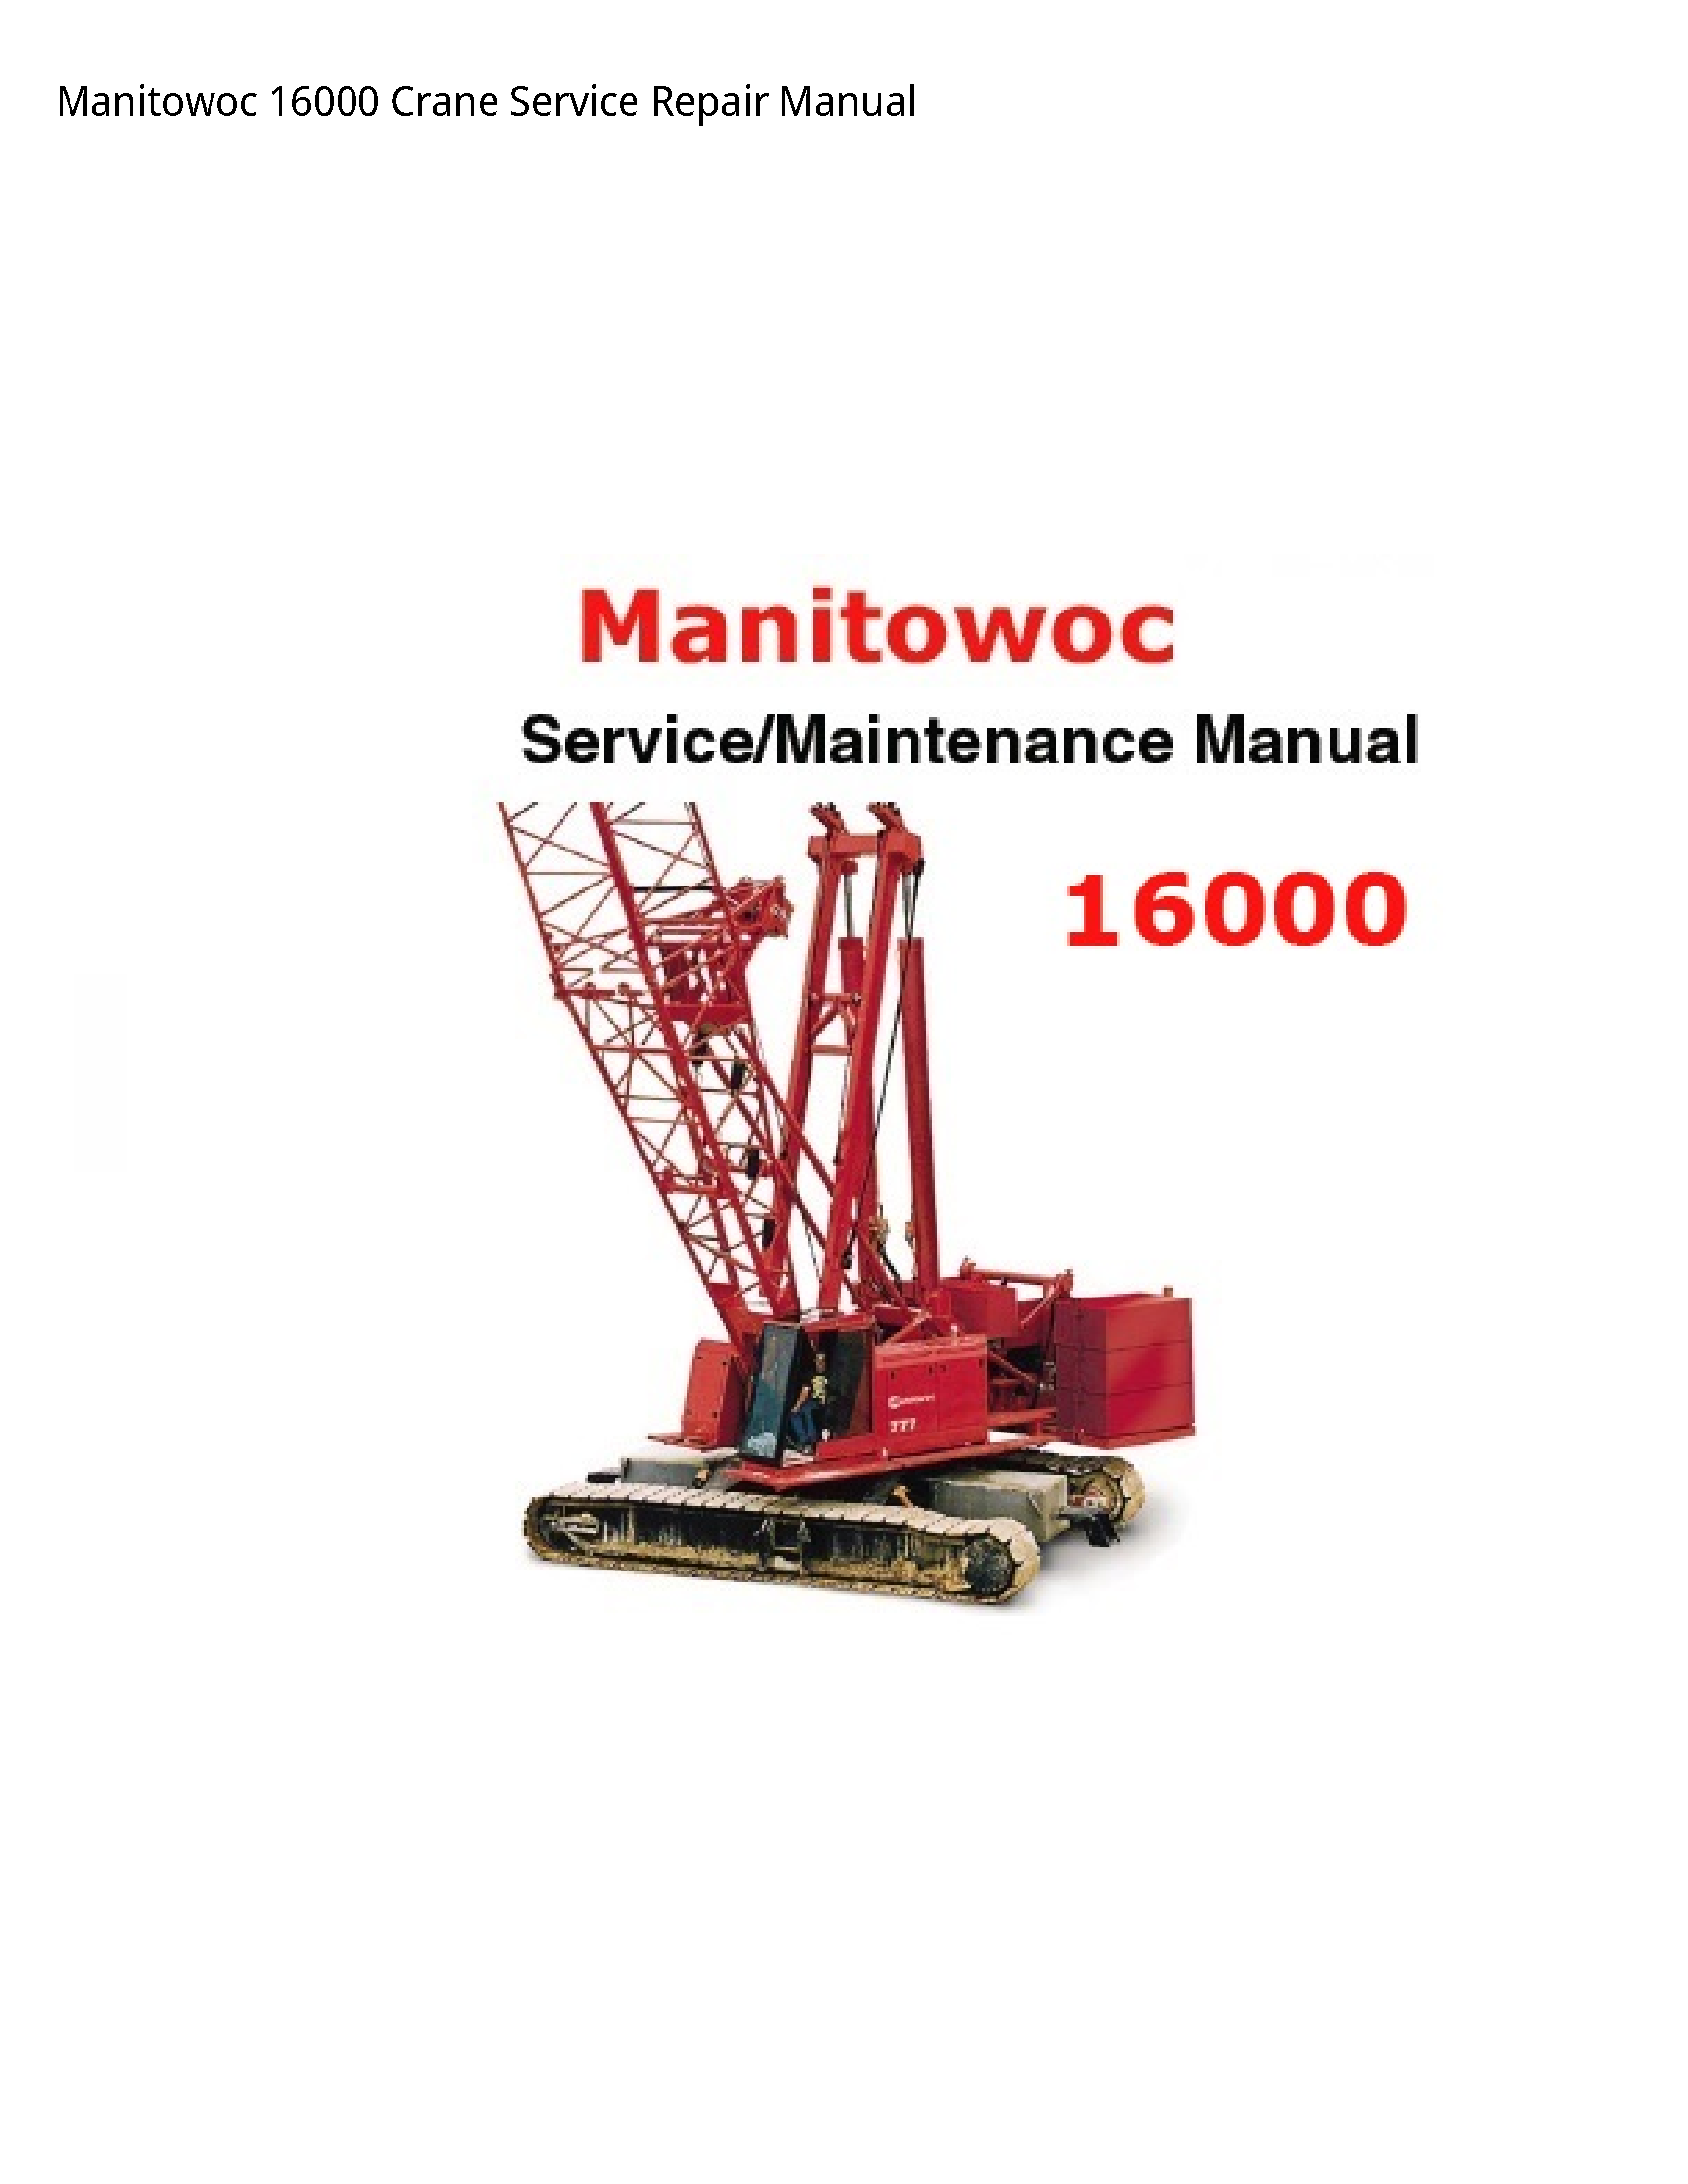 Manitowoc 16000 Crane manual